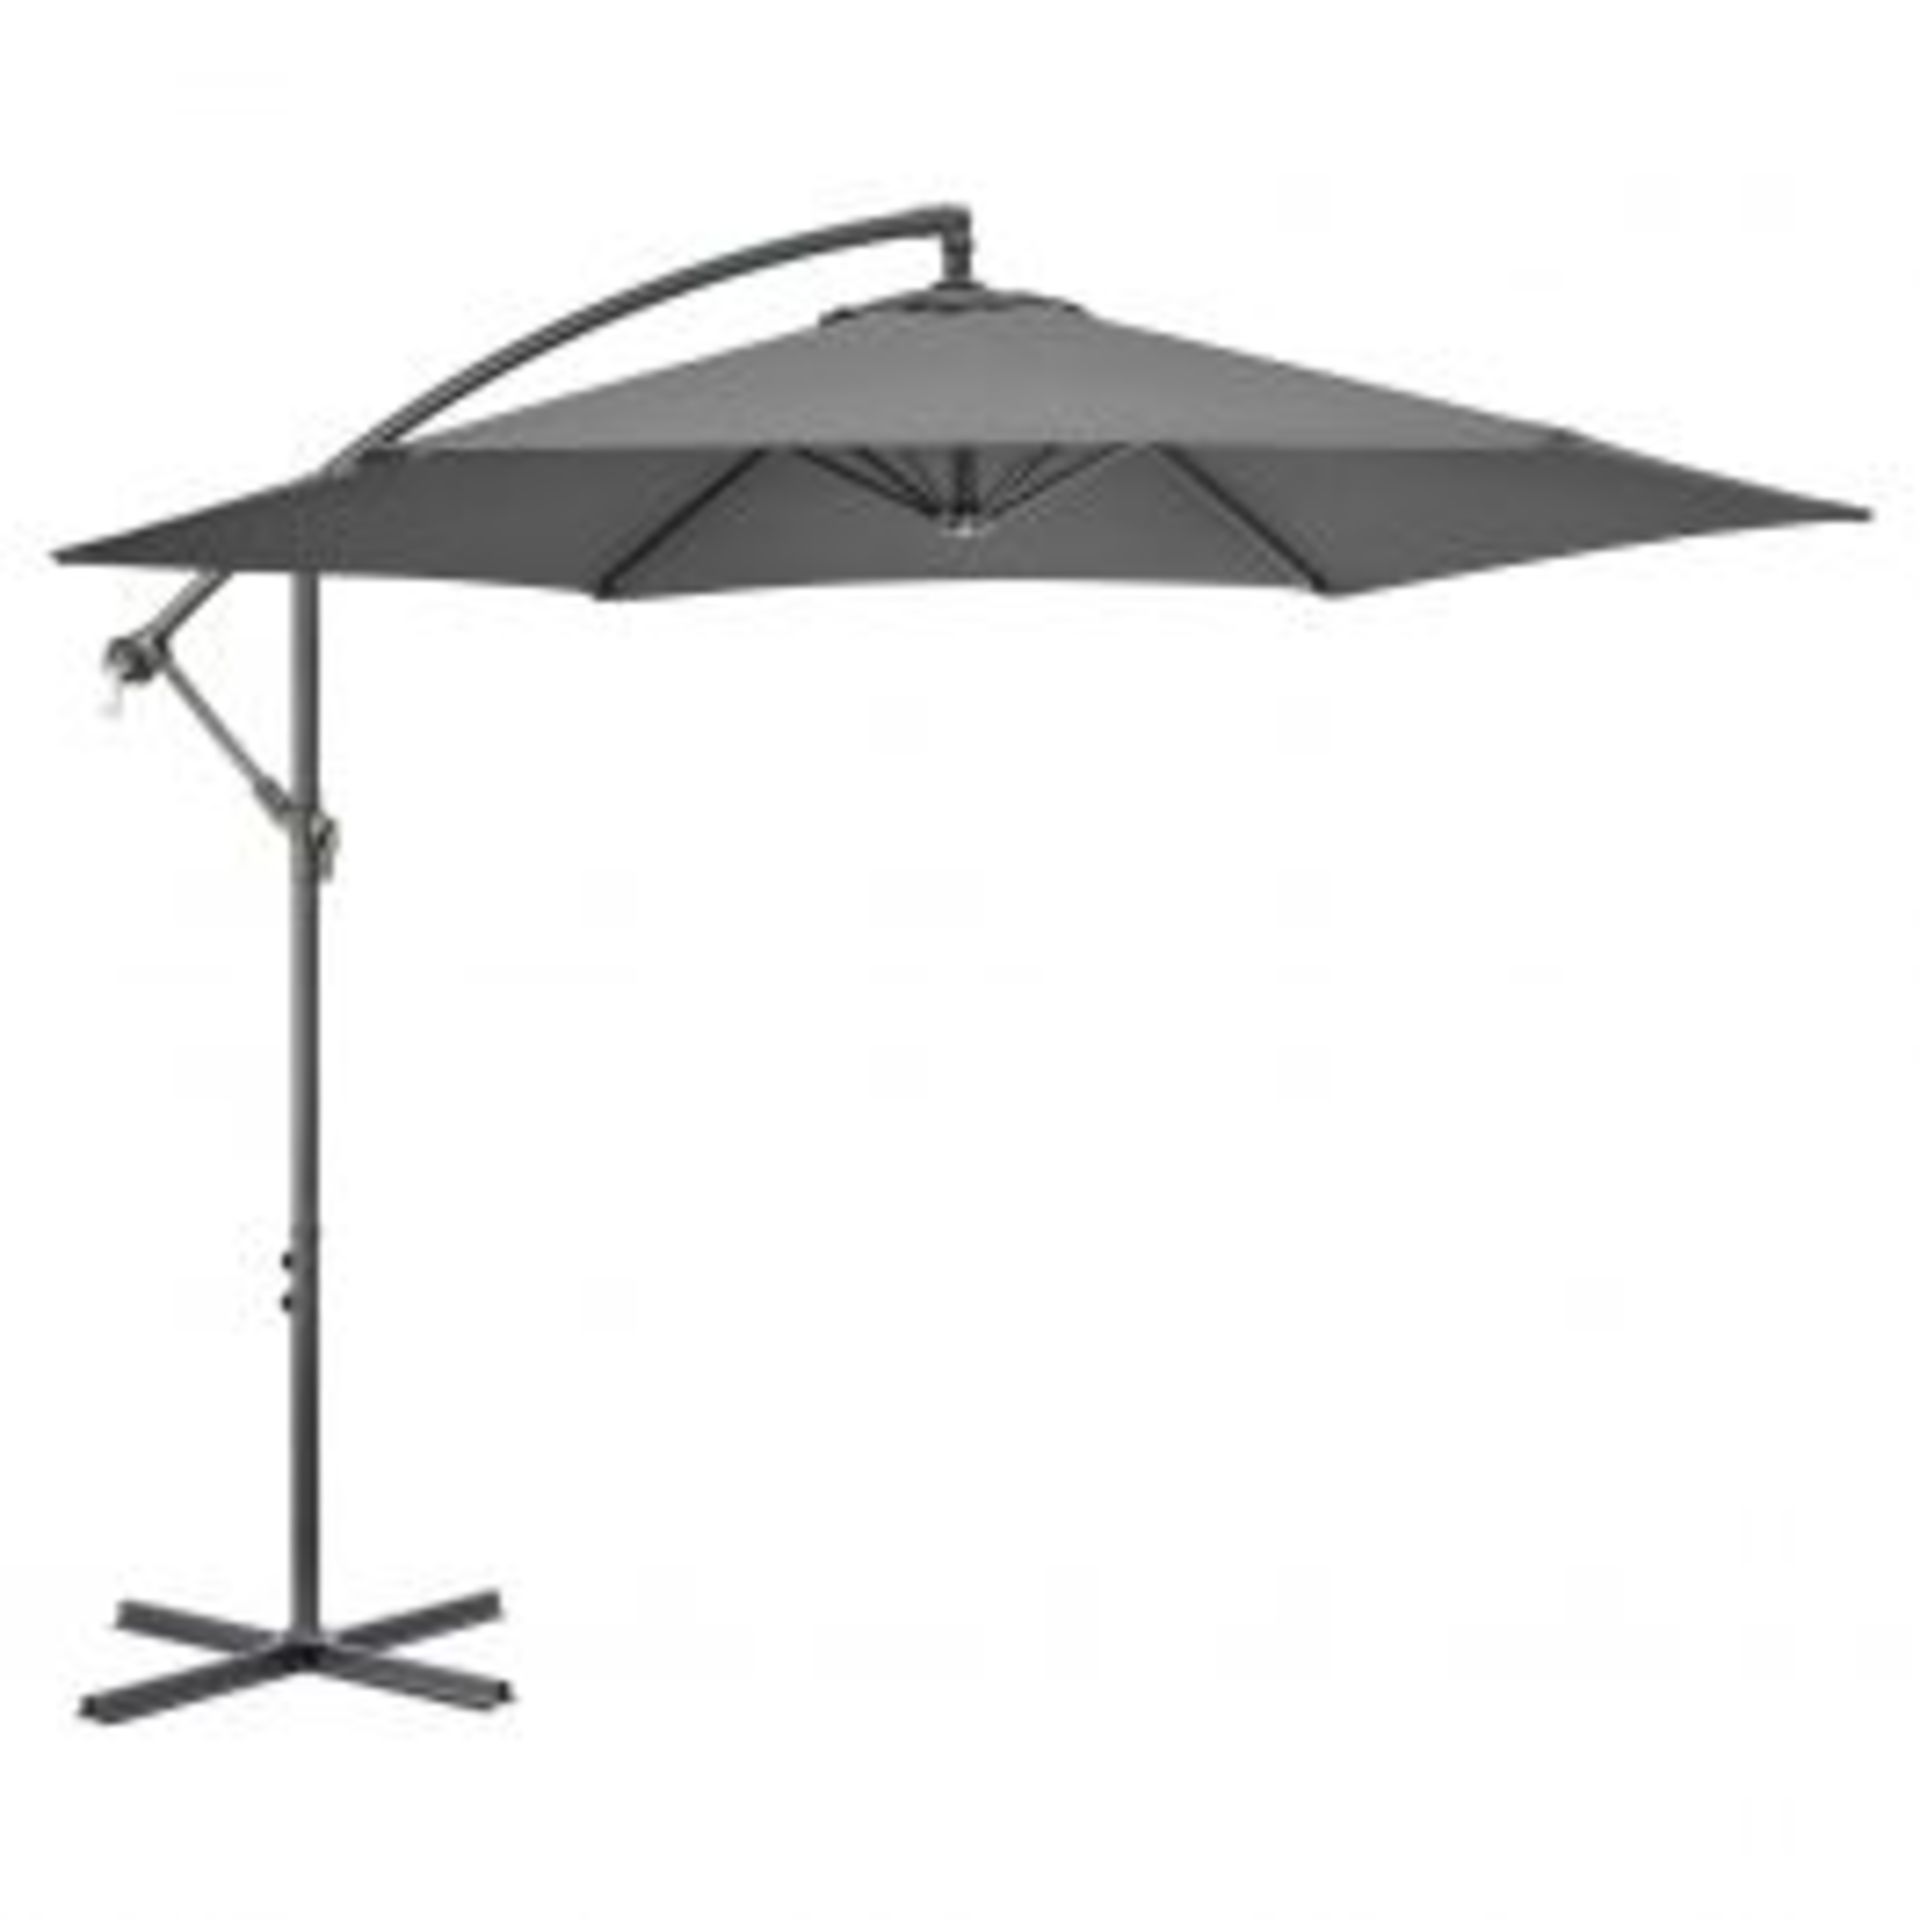 * 1x Grey Banana Umbrella with Parasol Base. Parasol 3m Diameter. Steel Frame. 180g Polyester. Base,